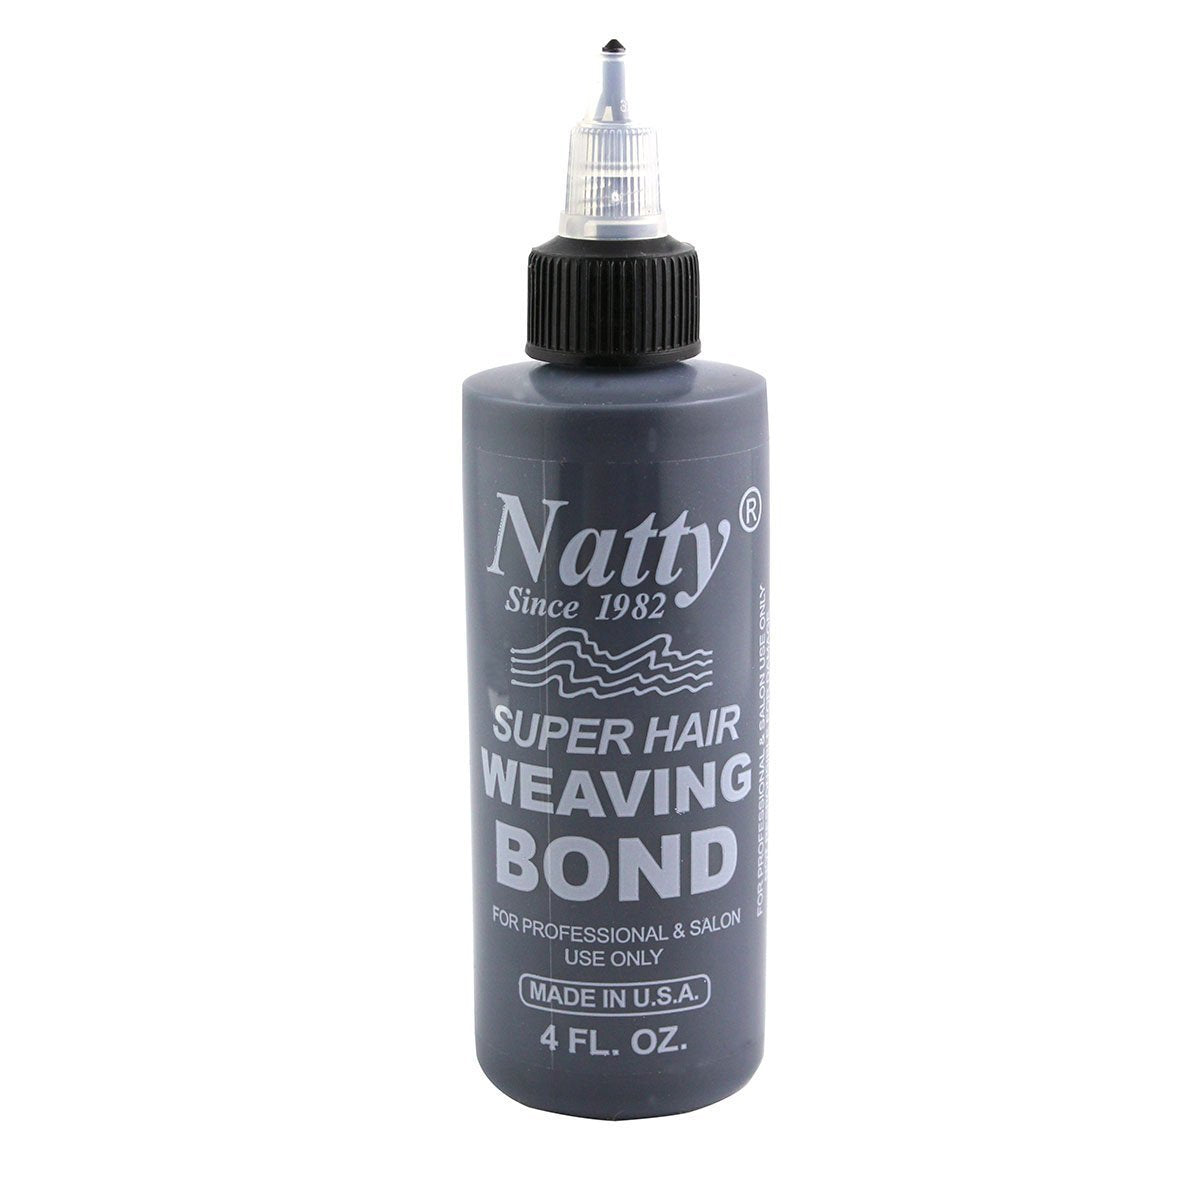 Natty's Bonding Glue